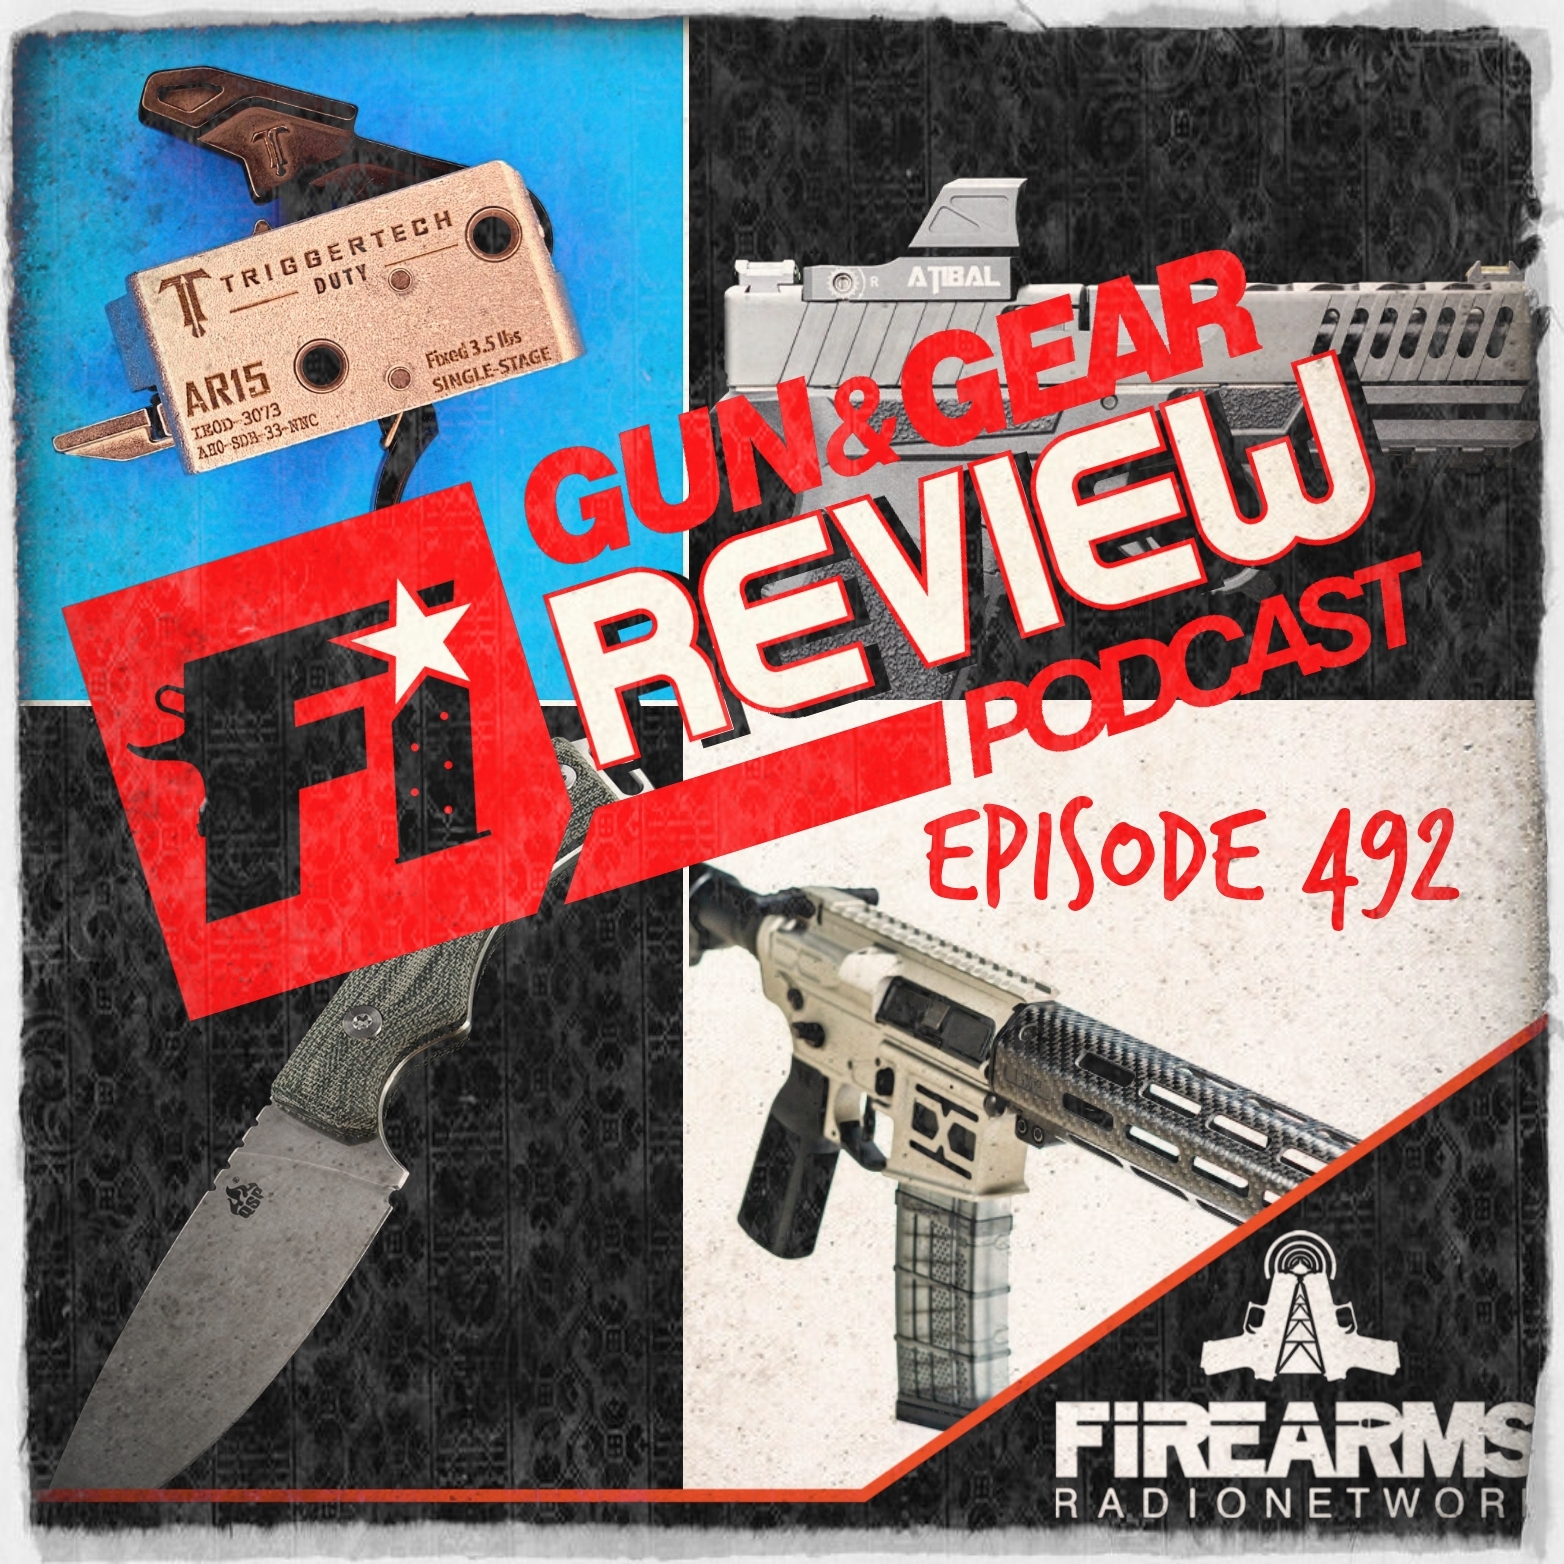 Gun & Gear Review Podcast episode 492 – Just Doody